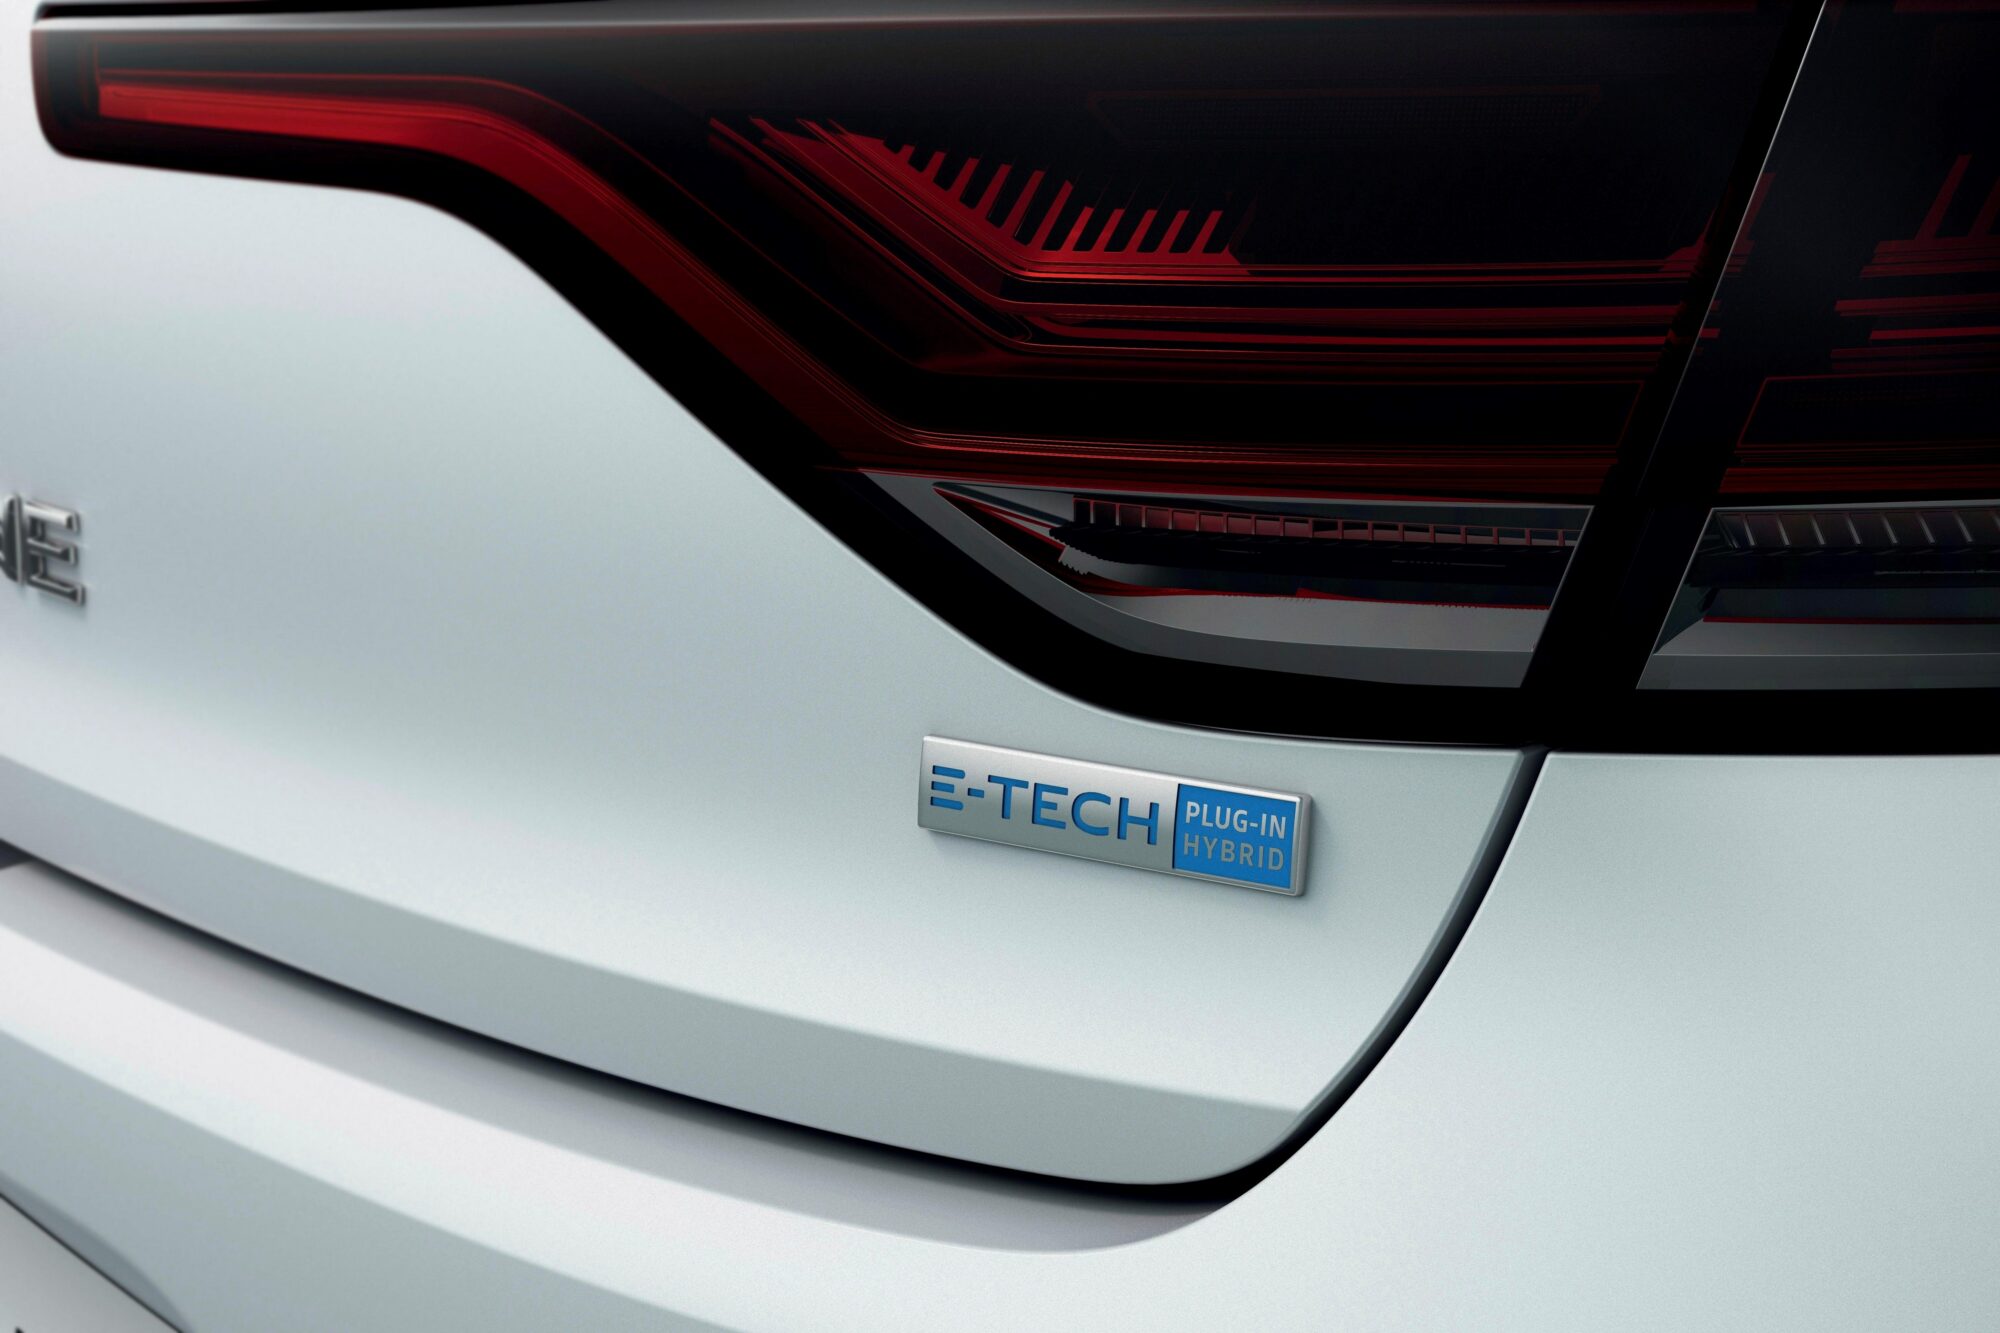 2020 - New Renault MEGANE ESTATE E-TECH Plug-in